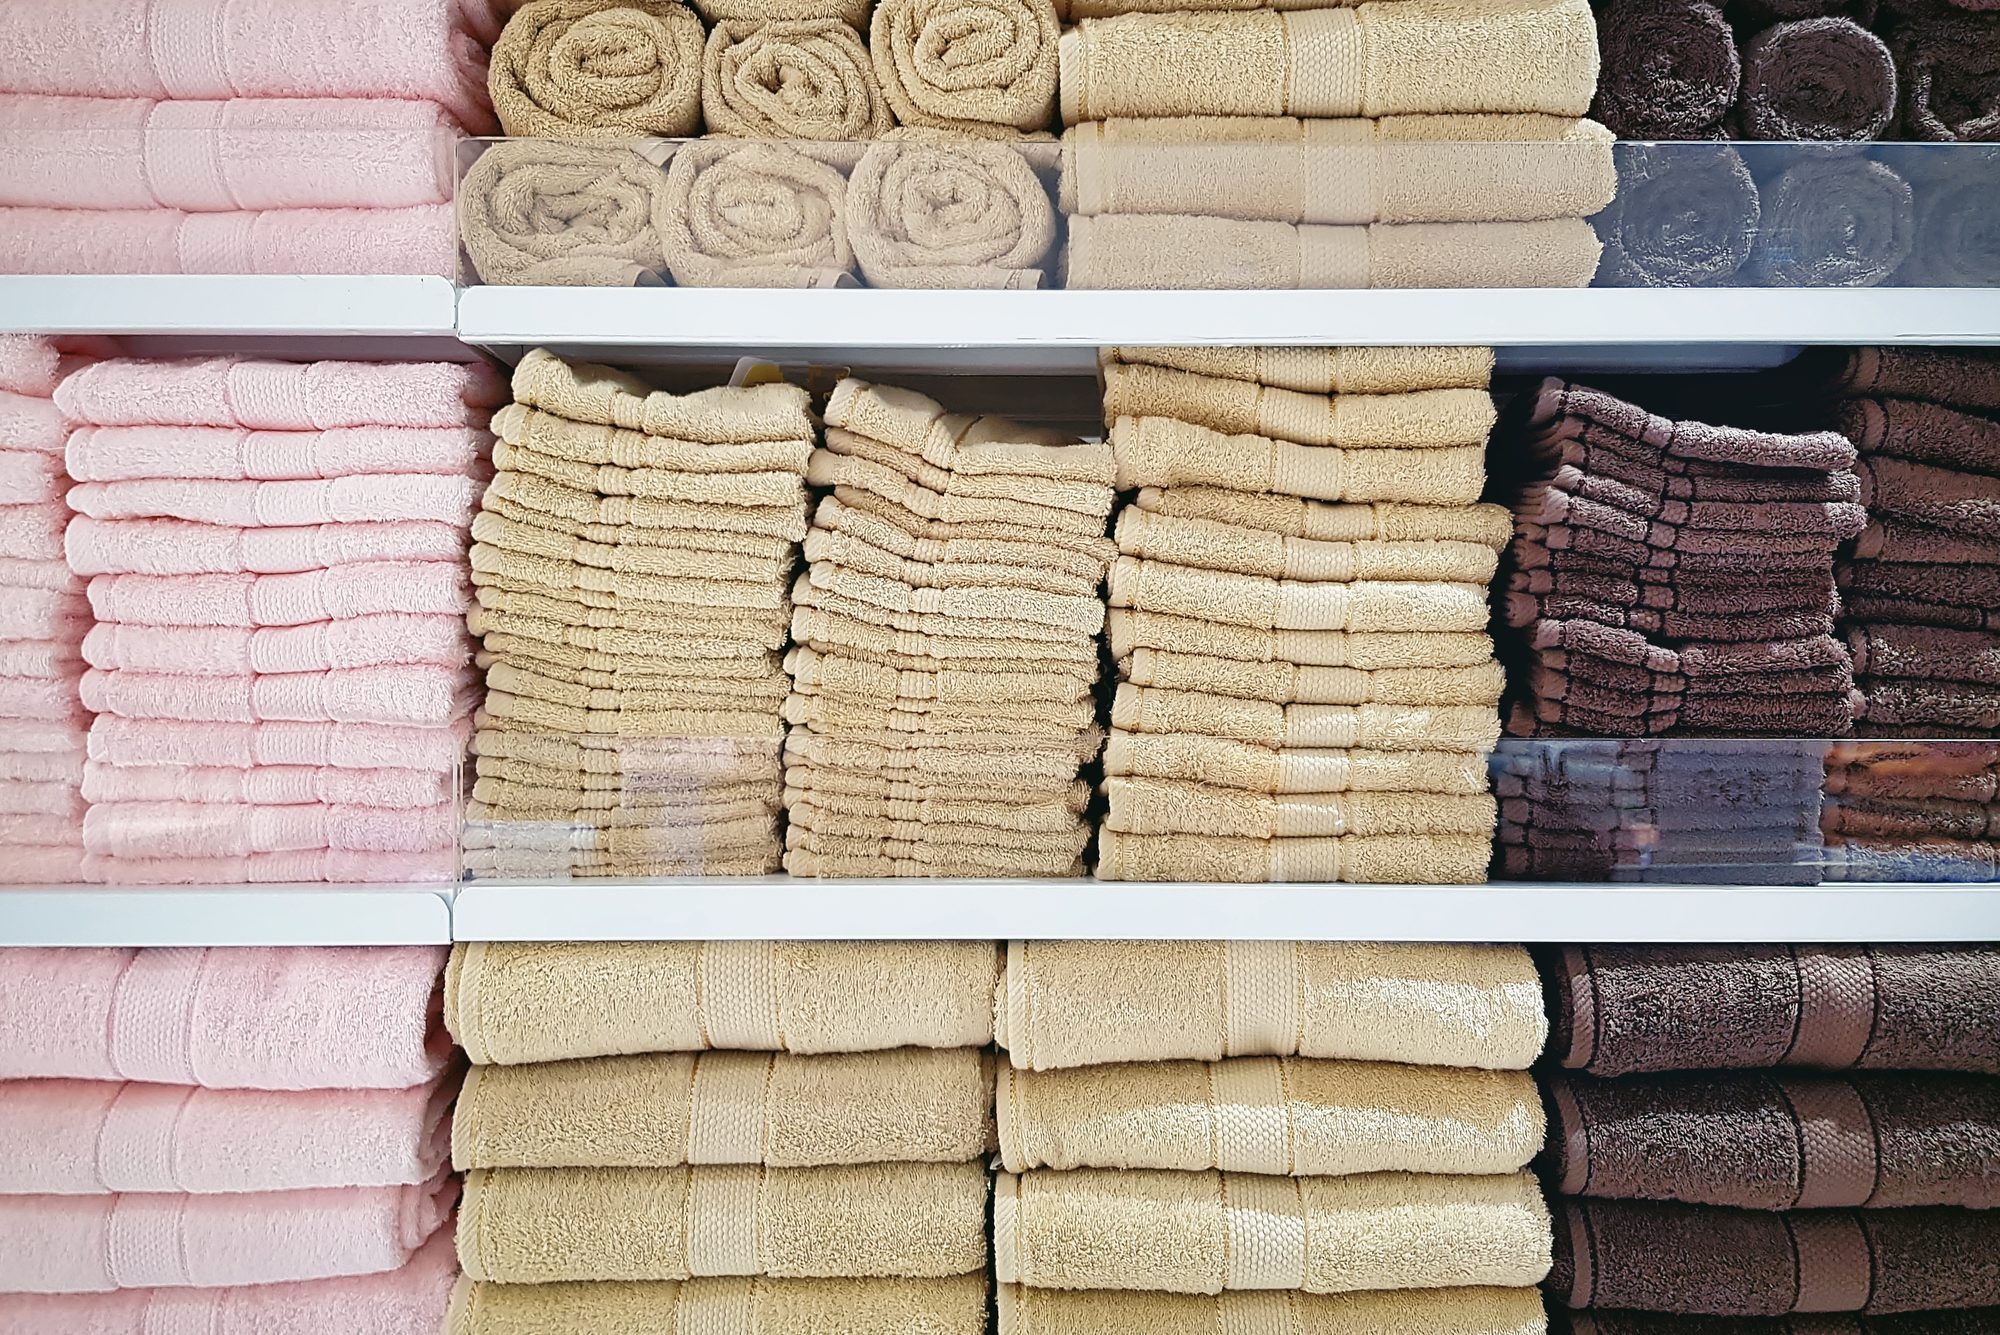 Internet-Favorite Towel Brand Onsen Just Dropped Plush, Hotel